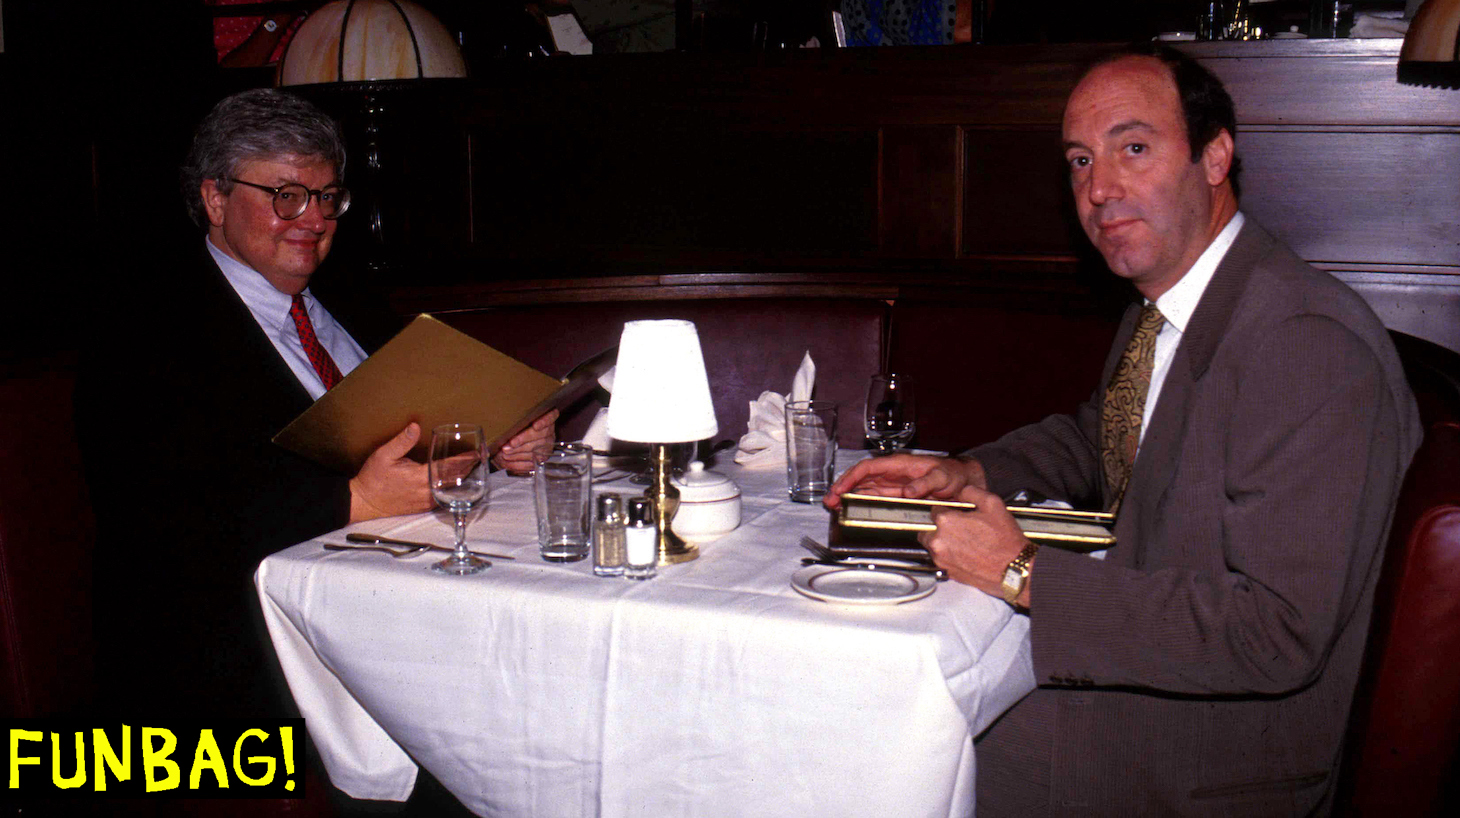 Roger Ebert & Gene Siskel dinning at the Brown Derby Restaurant, Walt Disney World, Florida in 1990